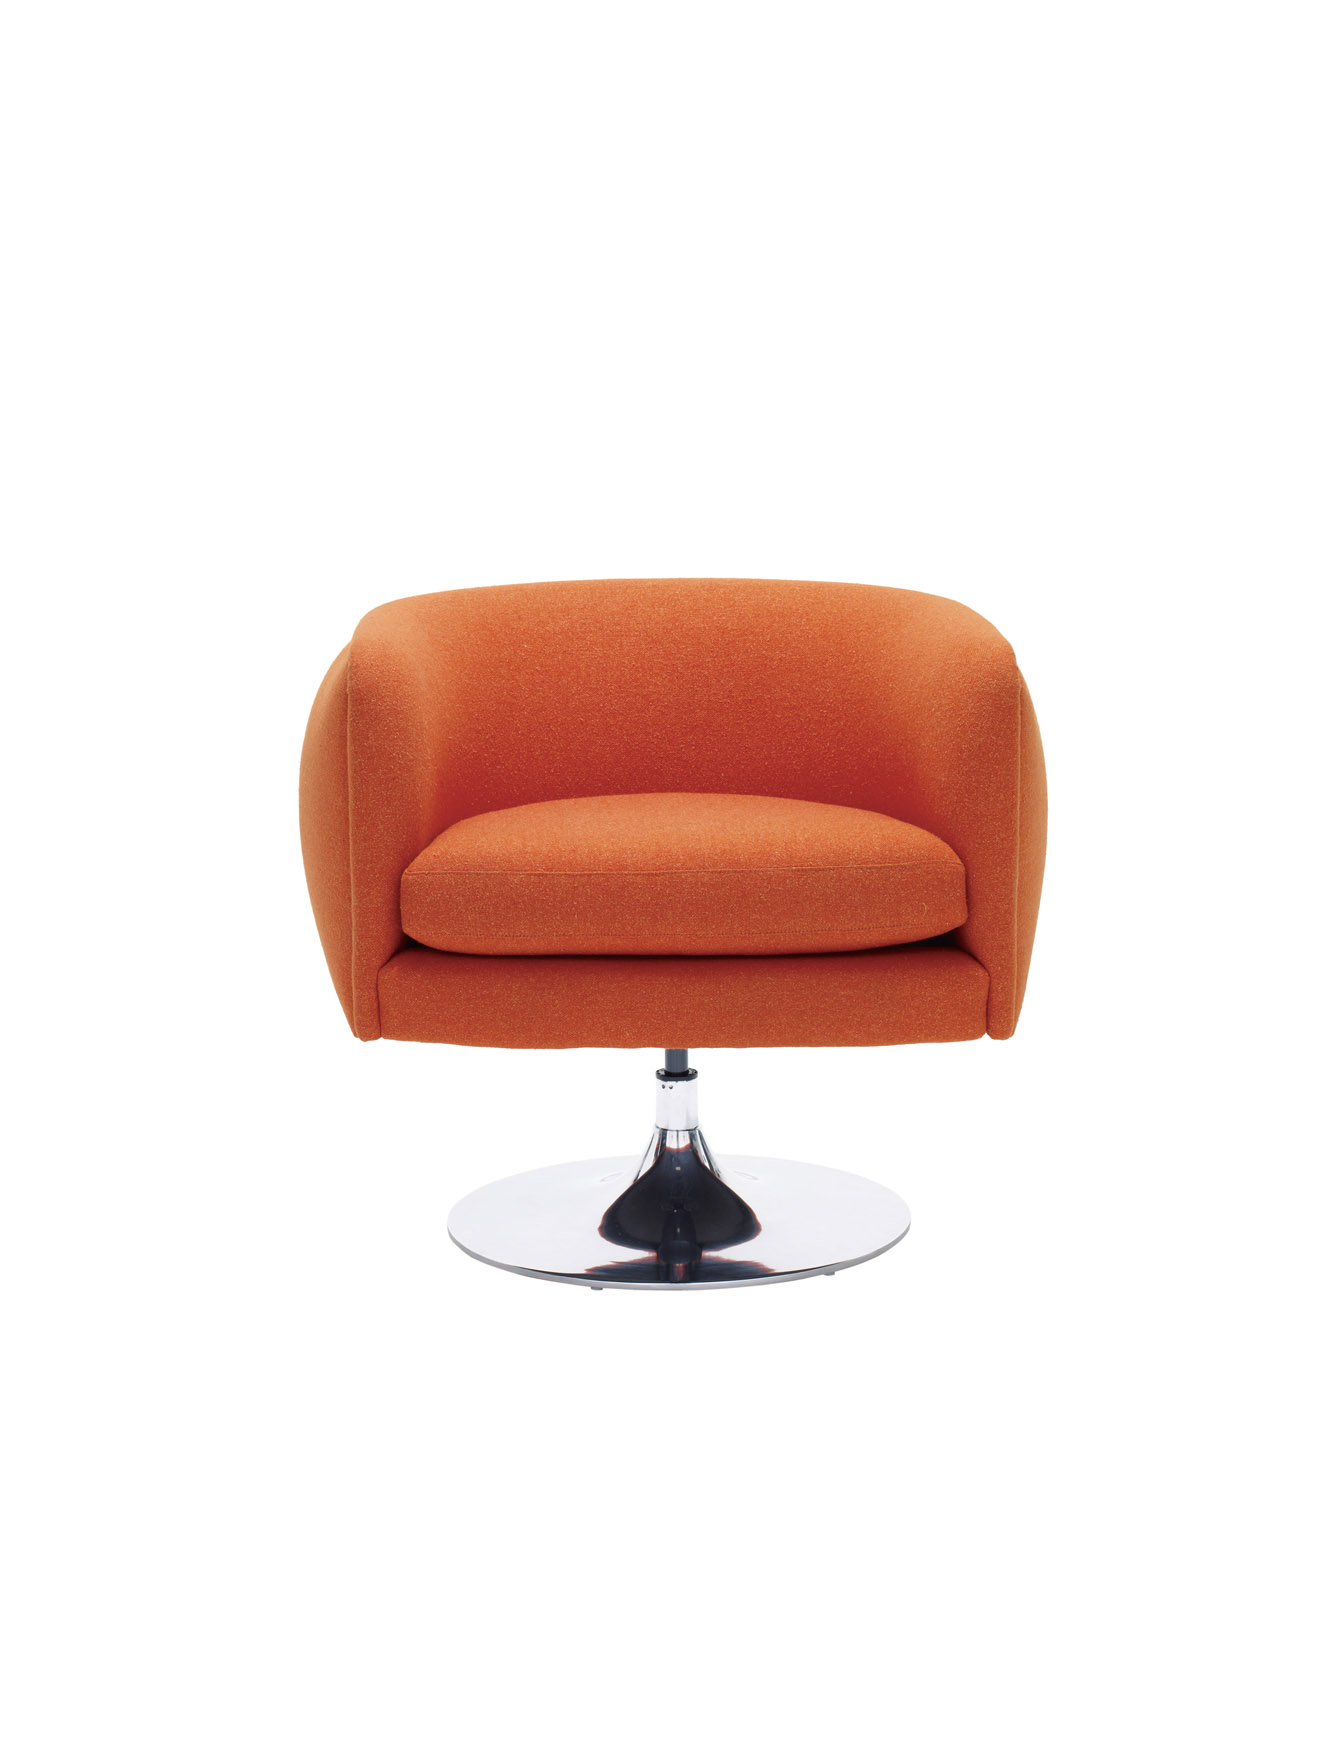 D’Urso Swivel Chair by Knoll